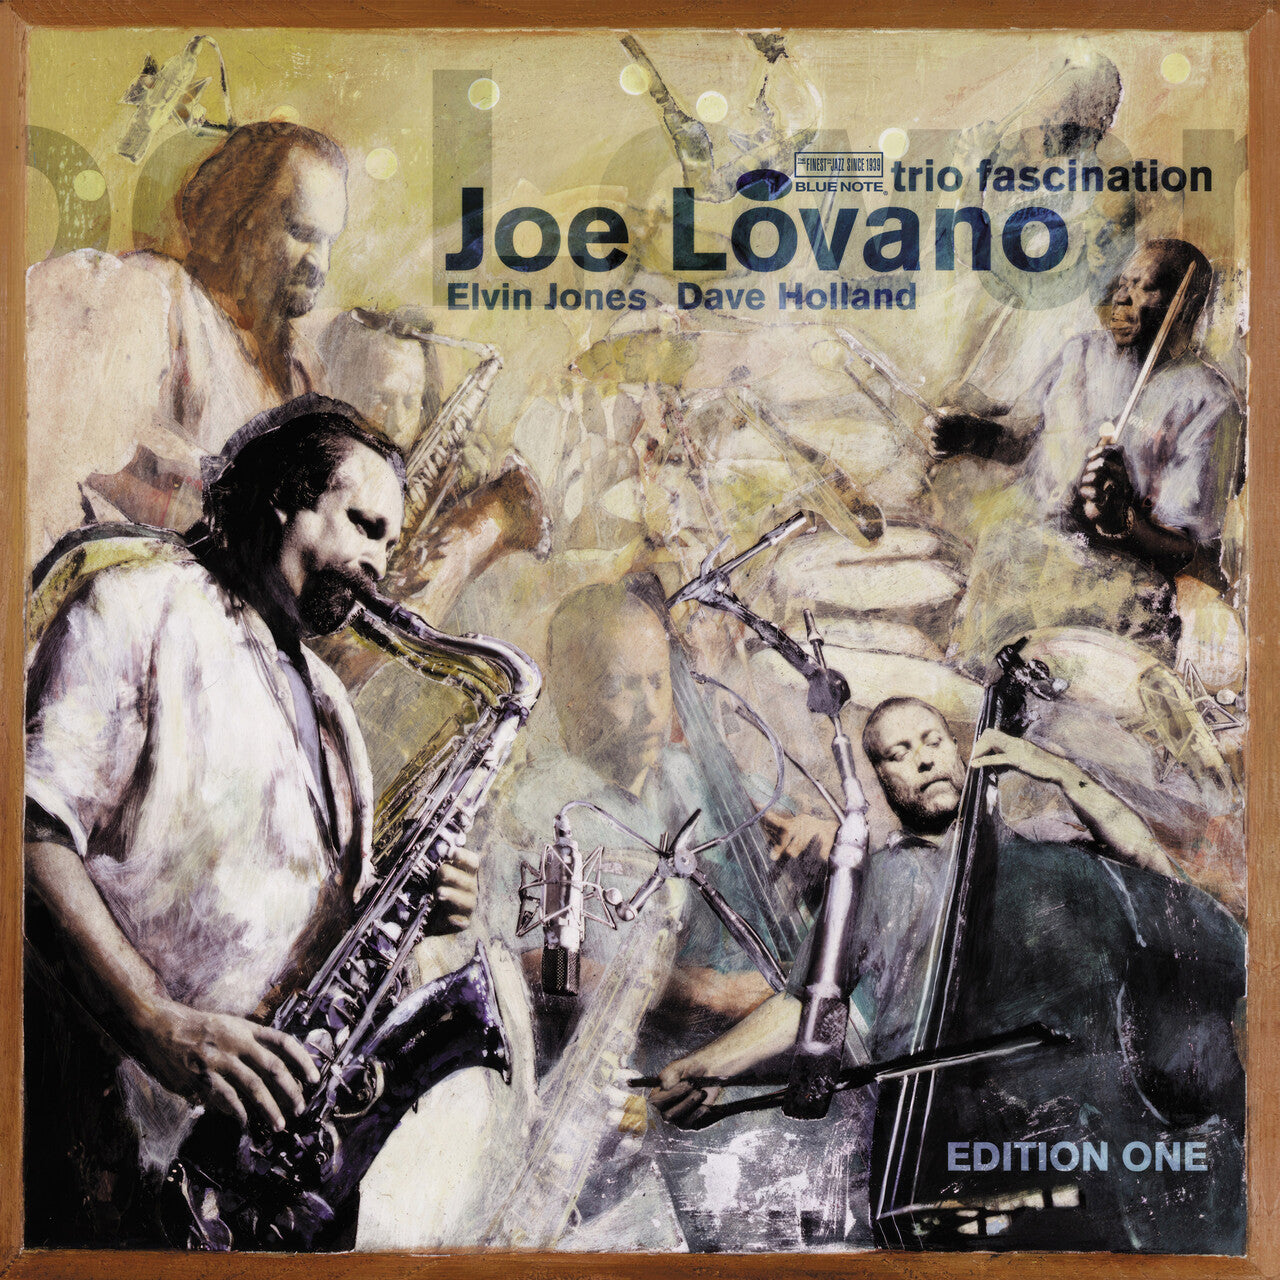 Joe Lovano - Trio Fascination - Edition One (Tone Poet Series): Vinyl 2LP